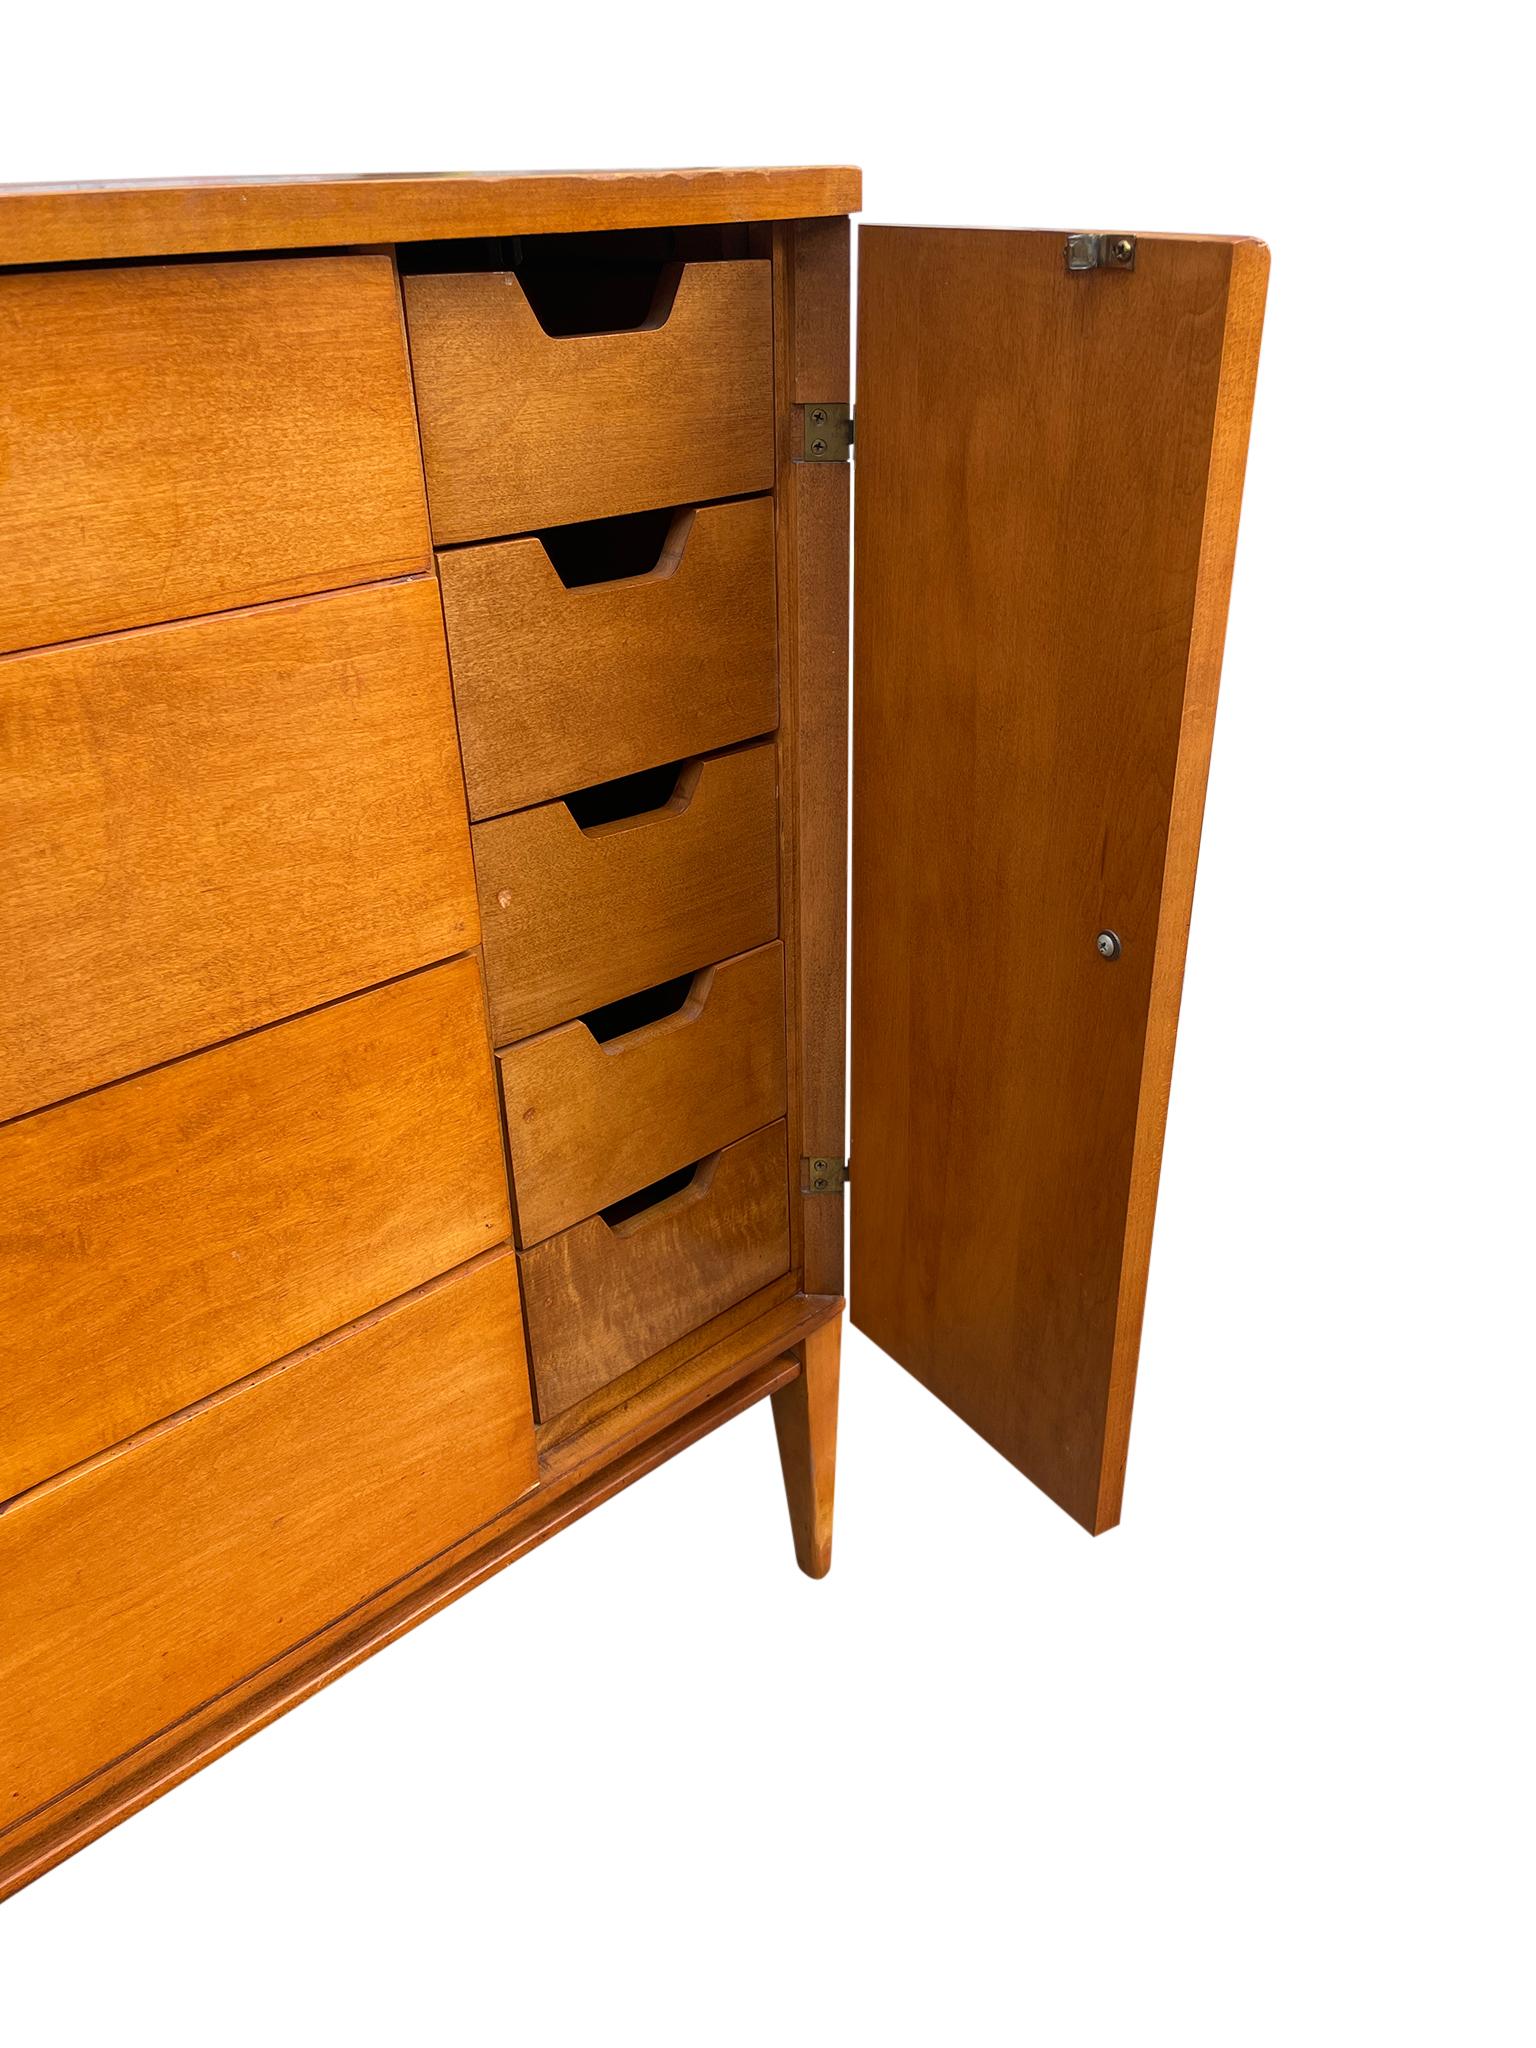 Midcentury Paul McCobb Maple 20-Drawer Dresser #1510 Tobacco Finish brass Pulls For Sale 1